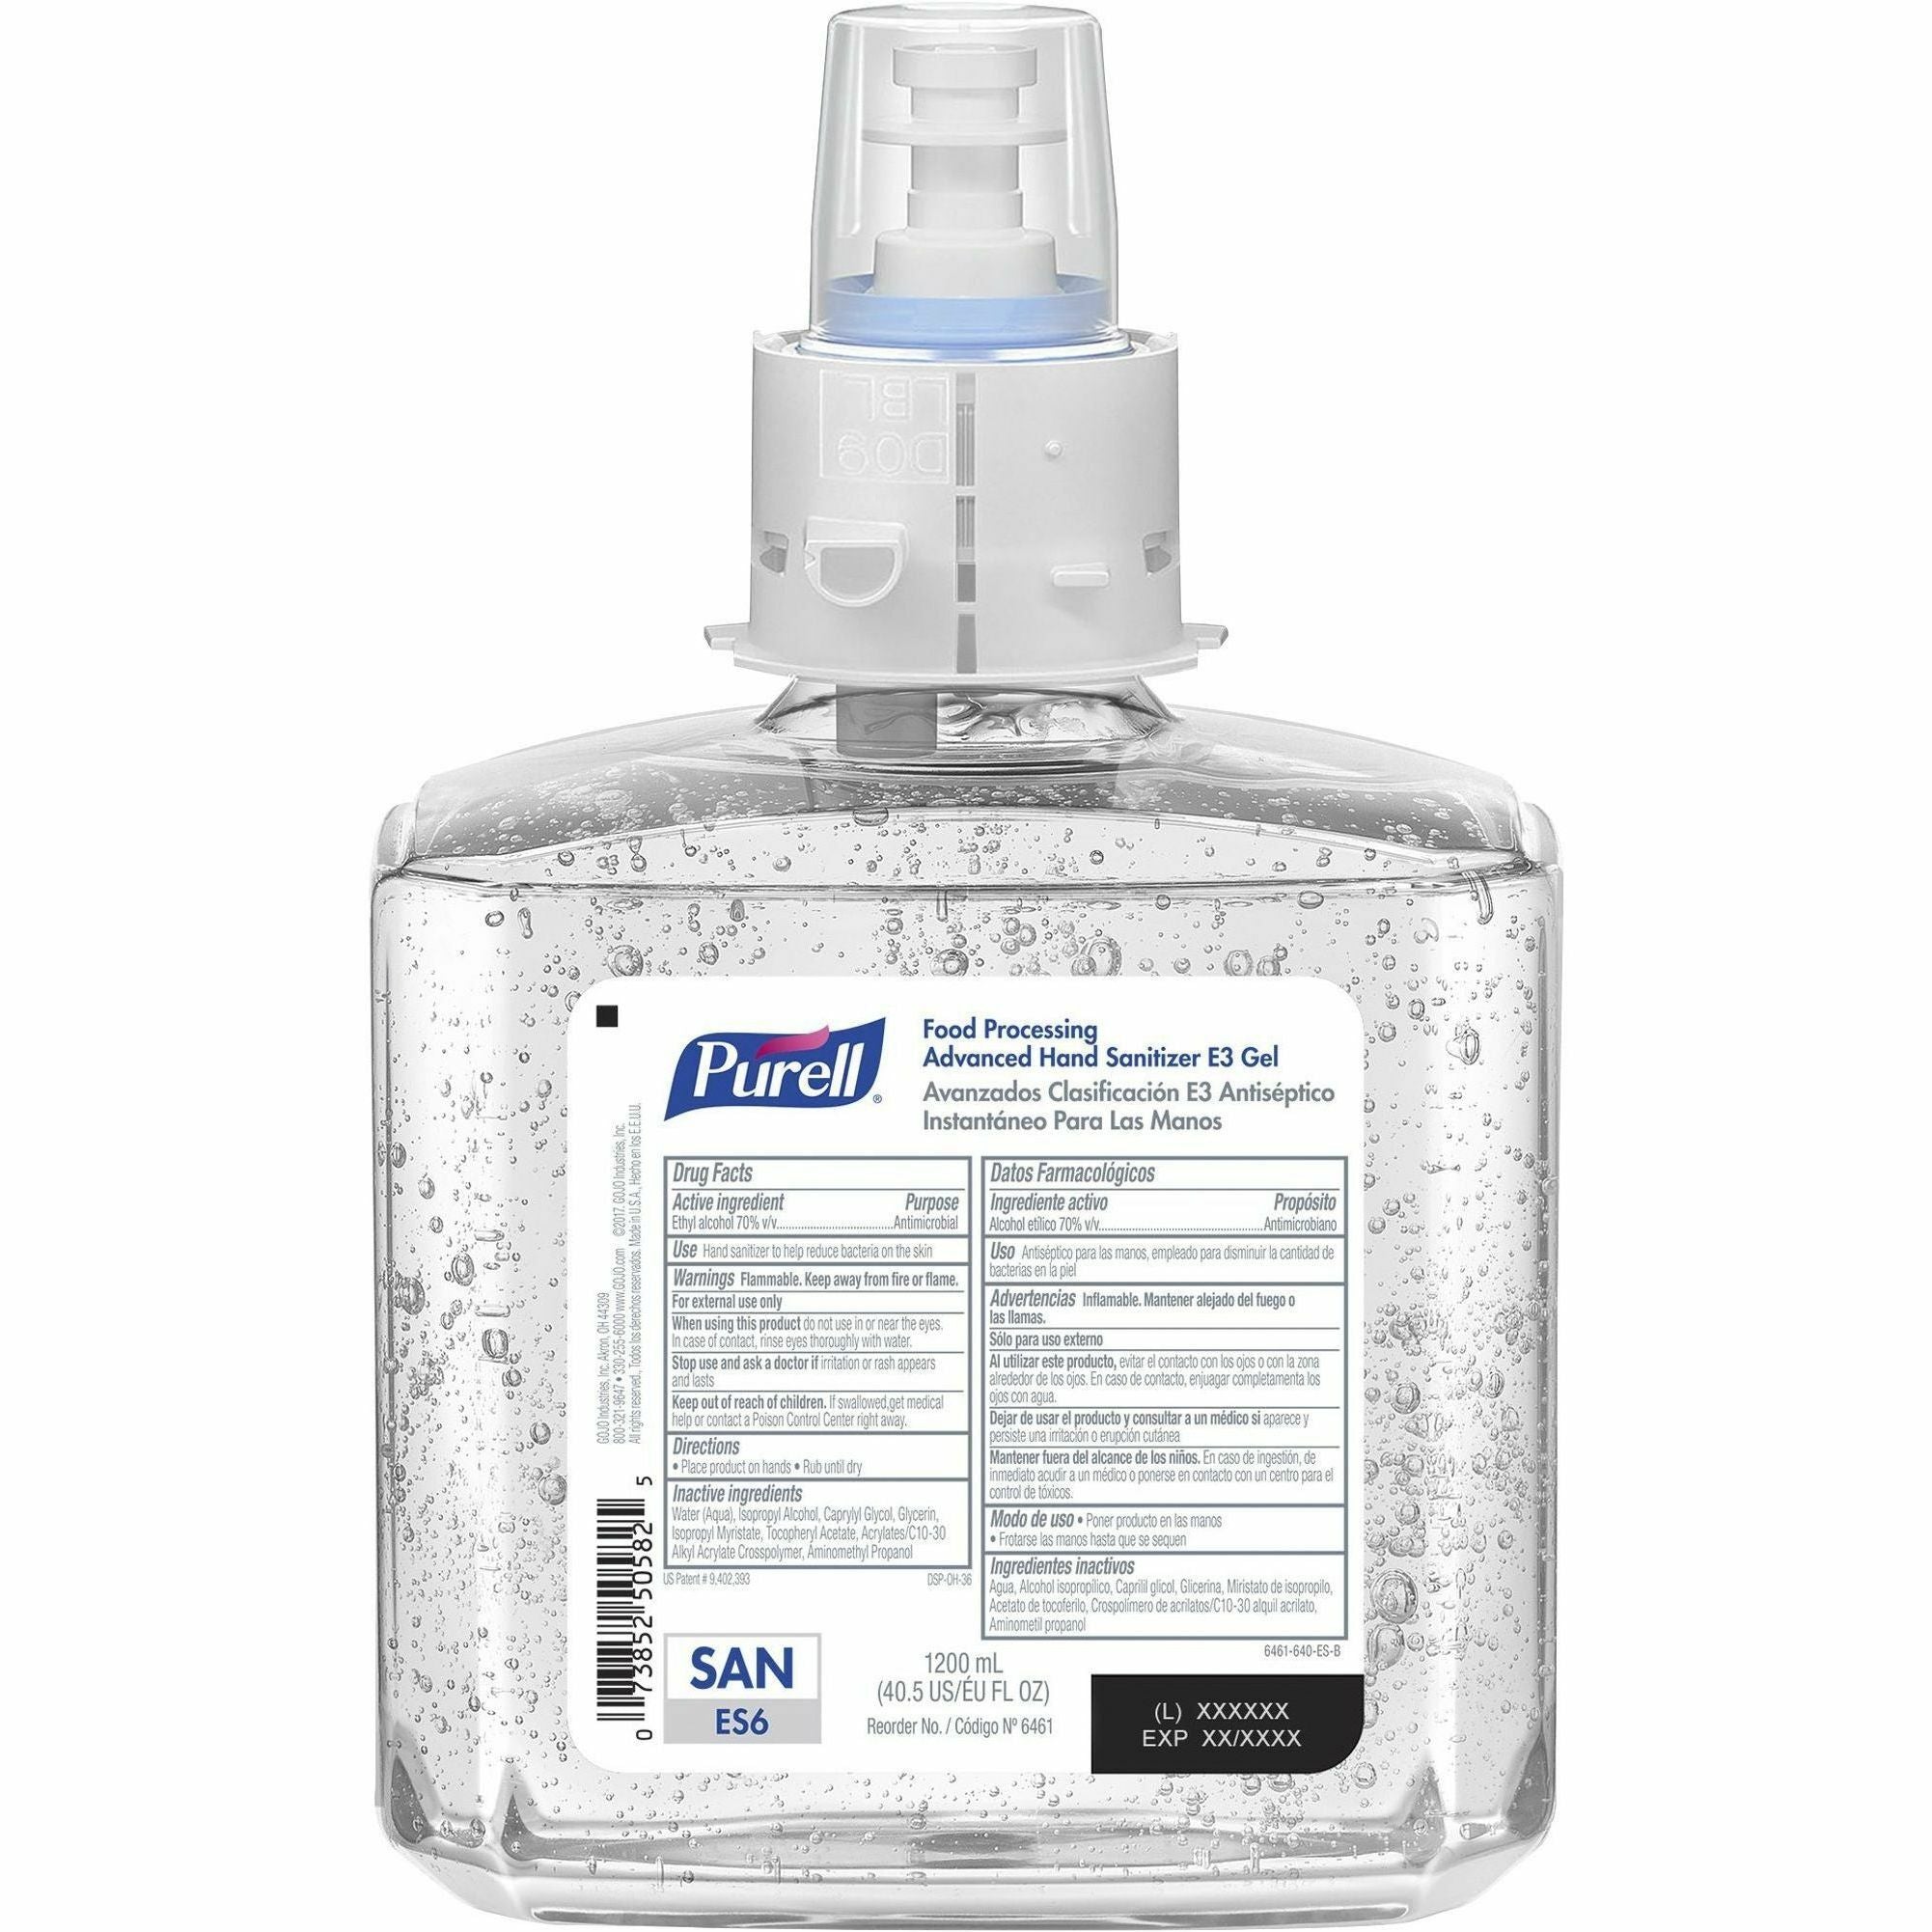 purell-hand-sanitizer-gel-refill-406-fl-oz-1200-ml-bacteria-remover-kill-germs-food-remover-hand-dye-free-fragrance-free-no-rinse-hygienic-1-carton_goj646102 - 2